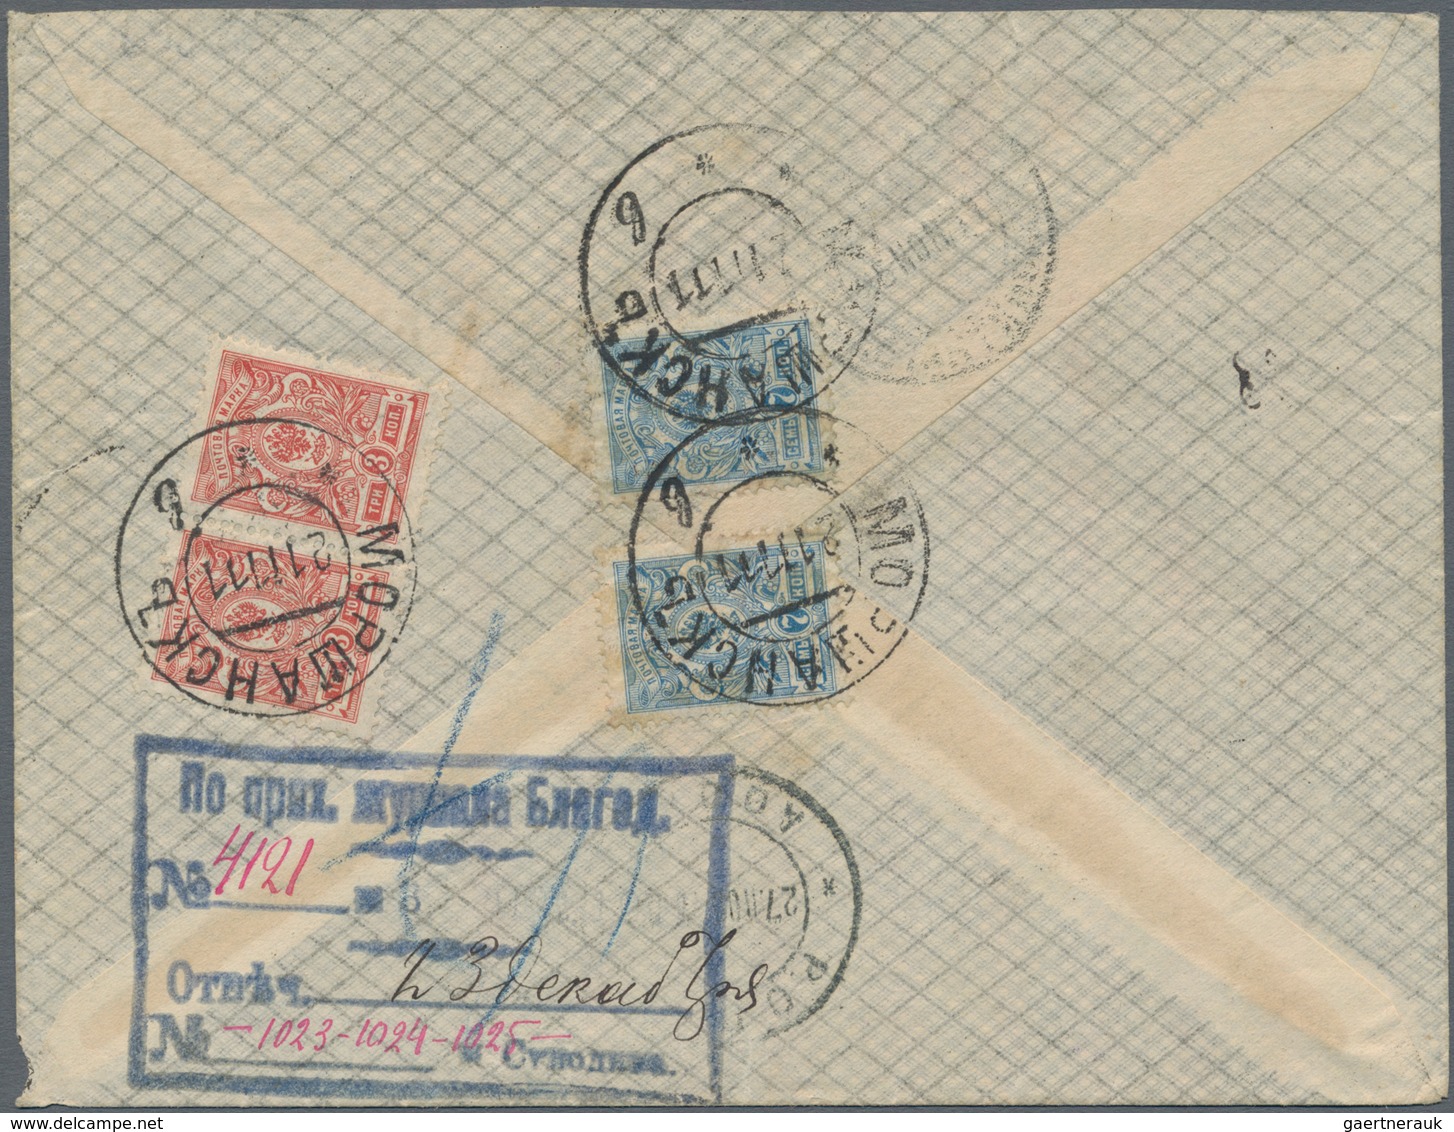 Russische Post In Der Levante - Handelsgesellschaft: 1911, Registered Letter From Morshansk Via Odes - Turkish Empire